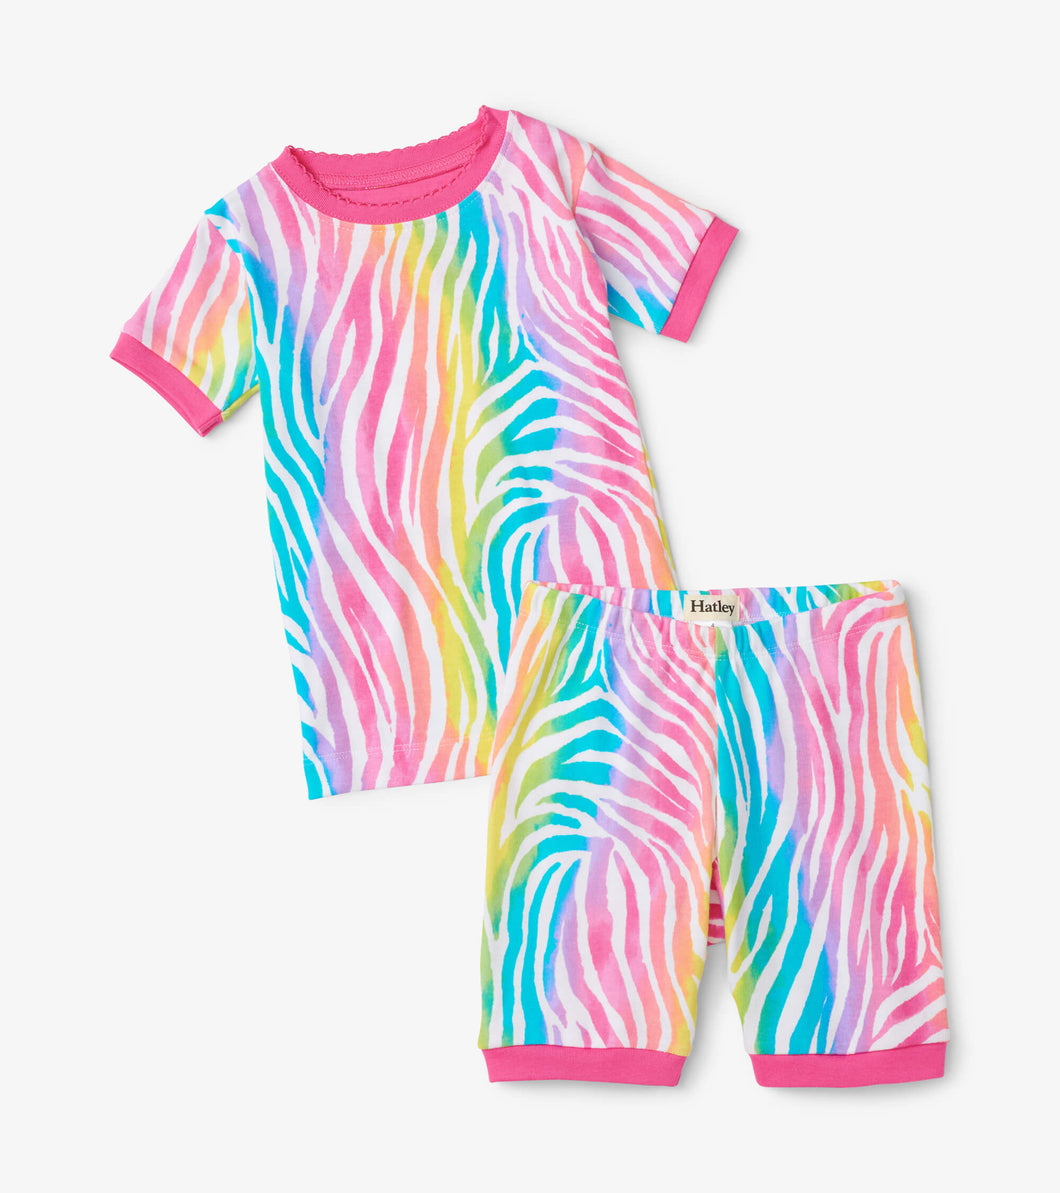 Hatley Rainbow Zebra Summer Pyjamas